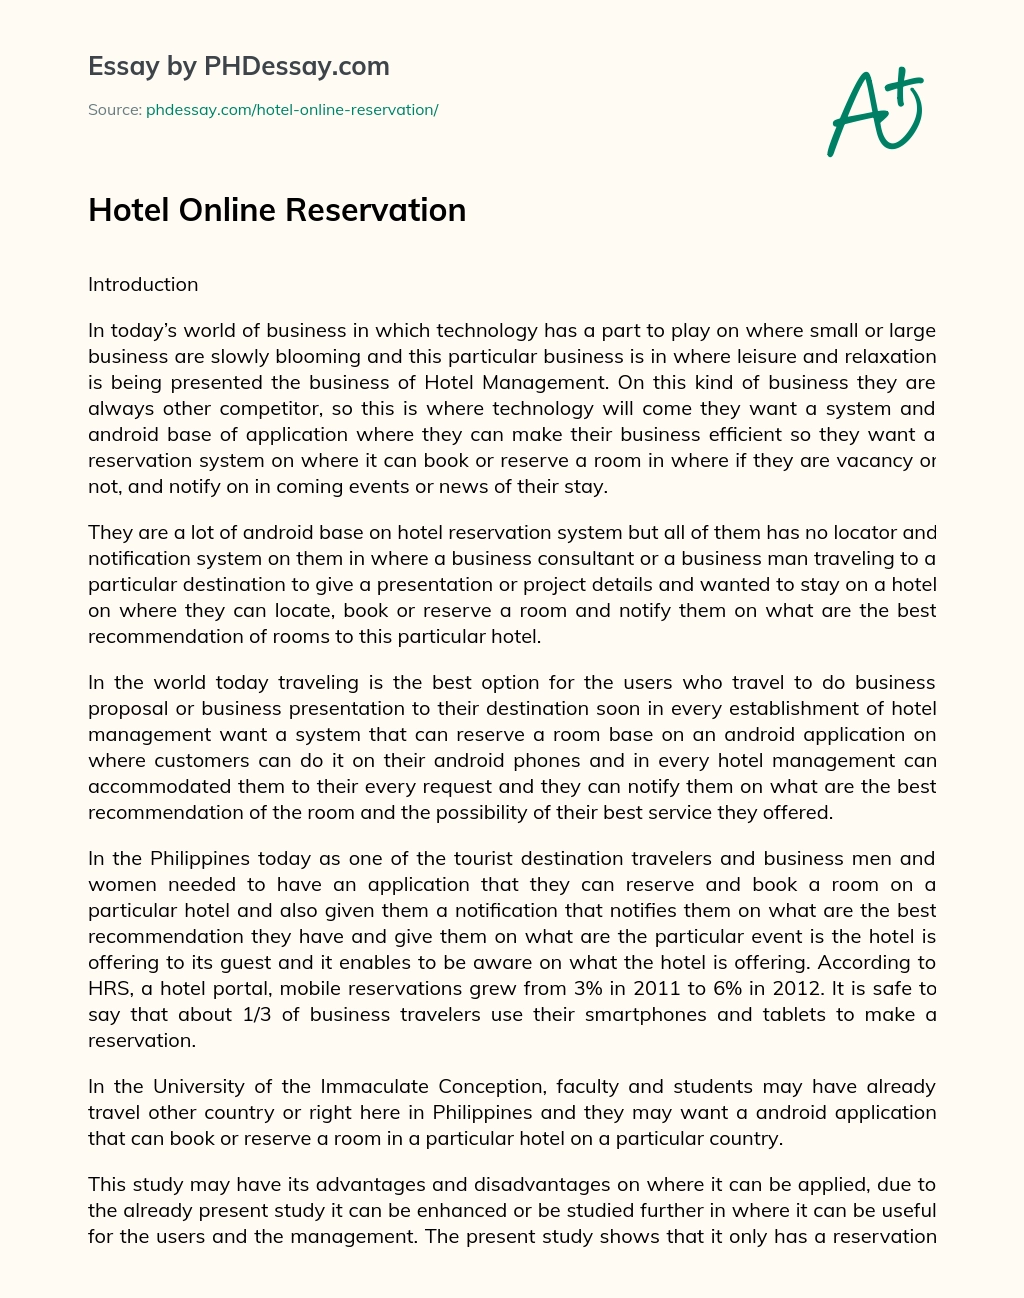 Hotel Online Reservation essay